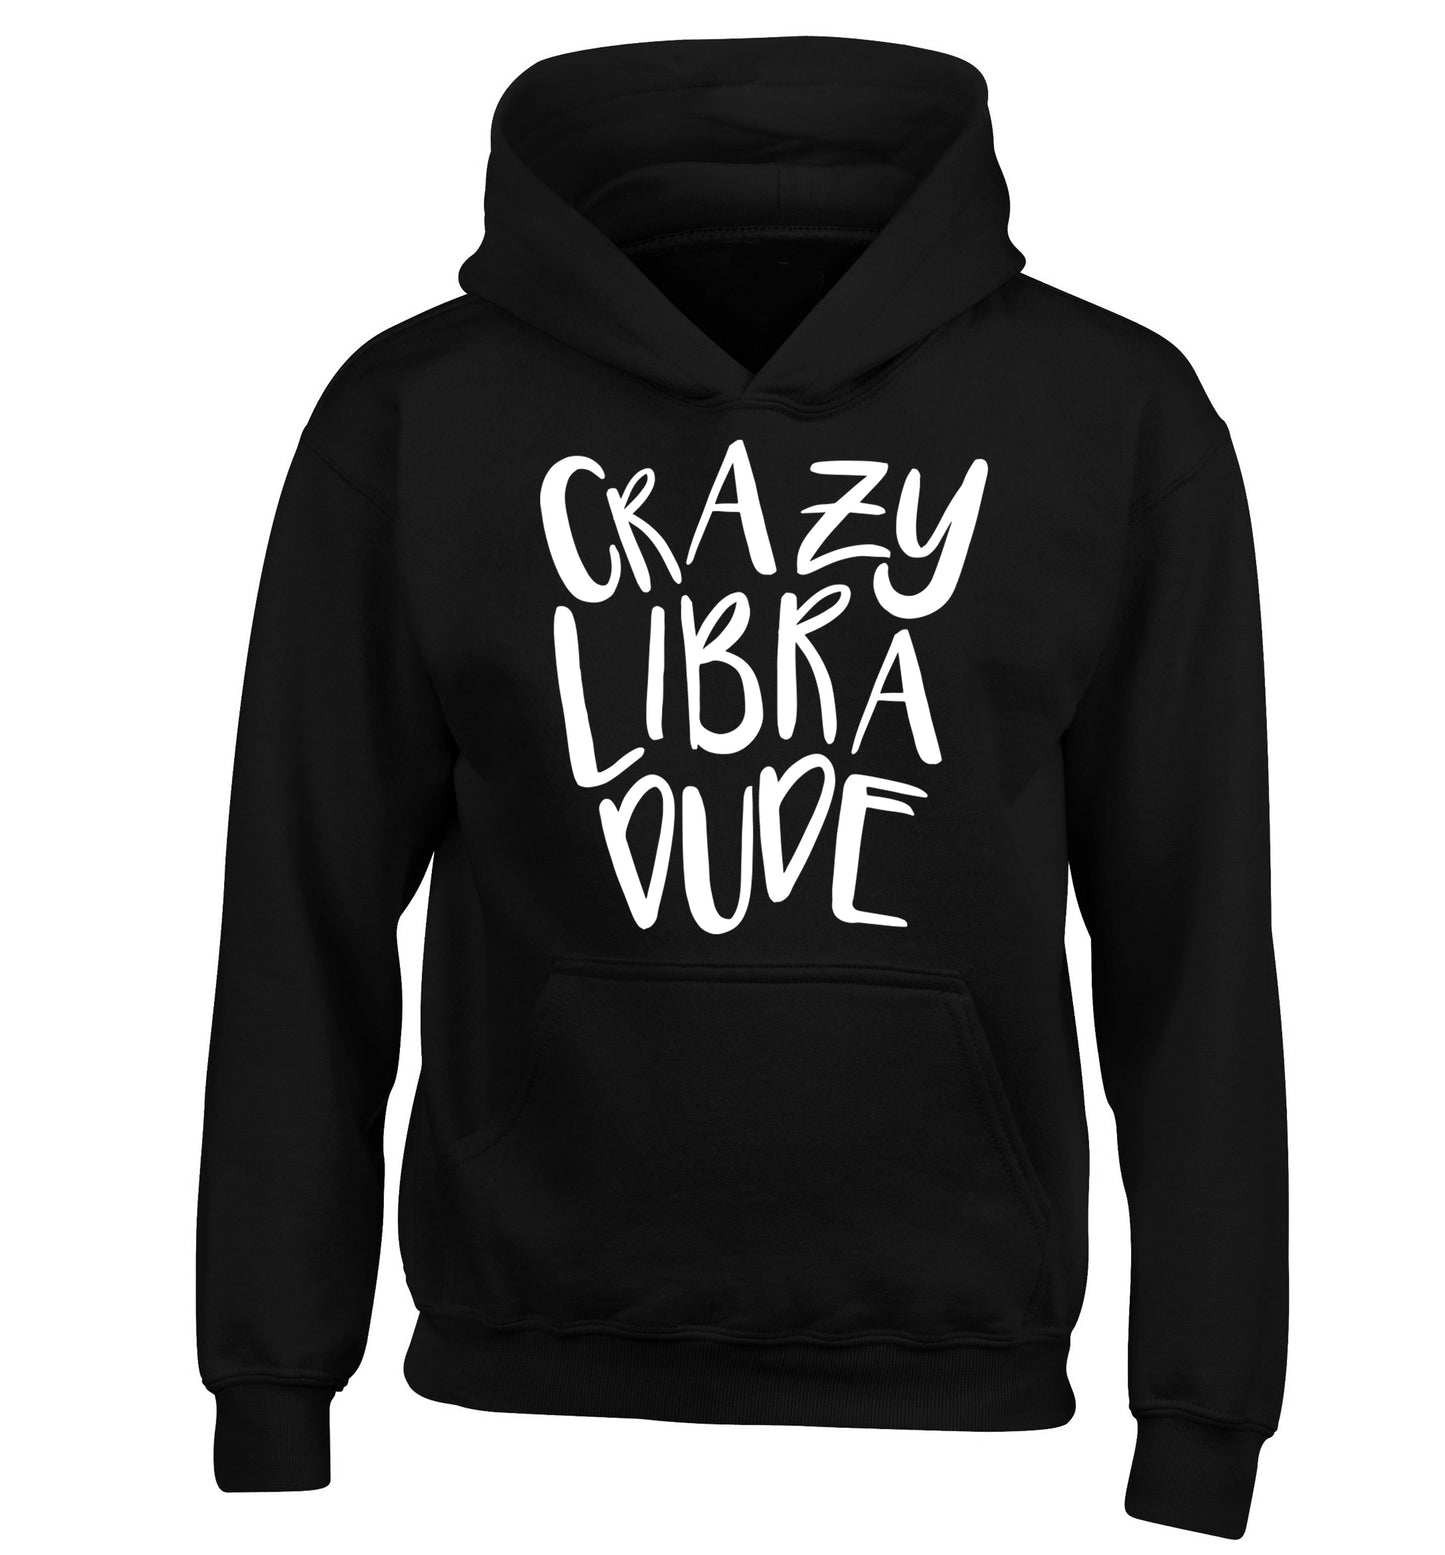 Crazy libra dude children's black hoodie 12-13 Years